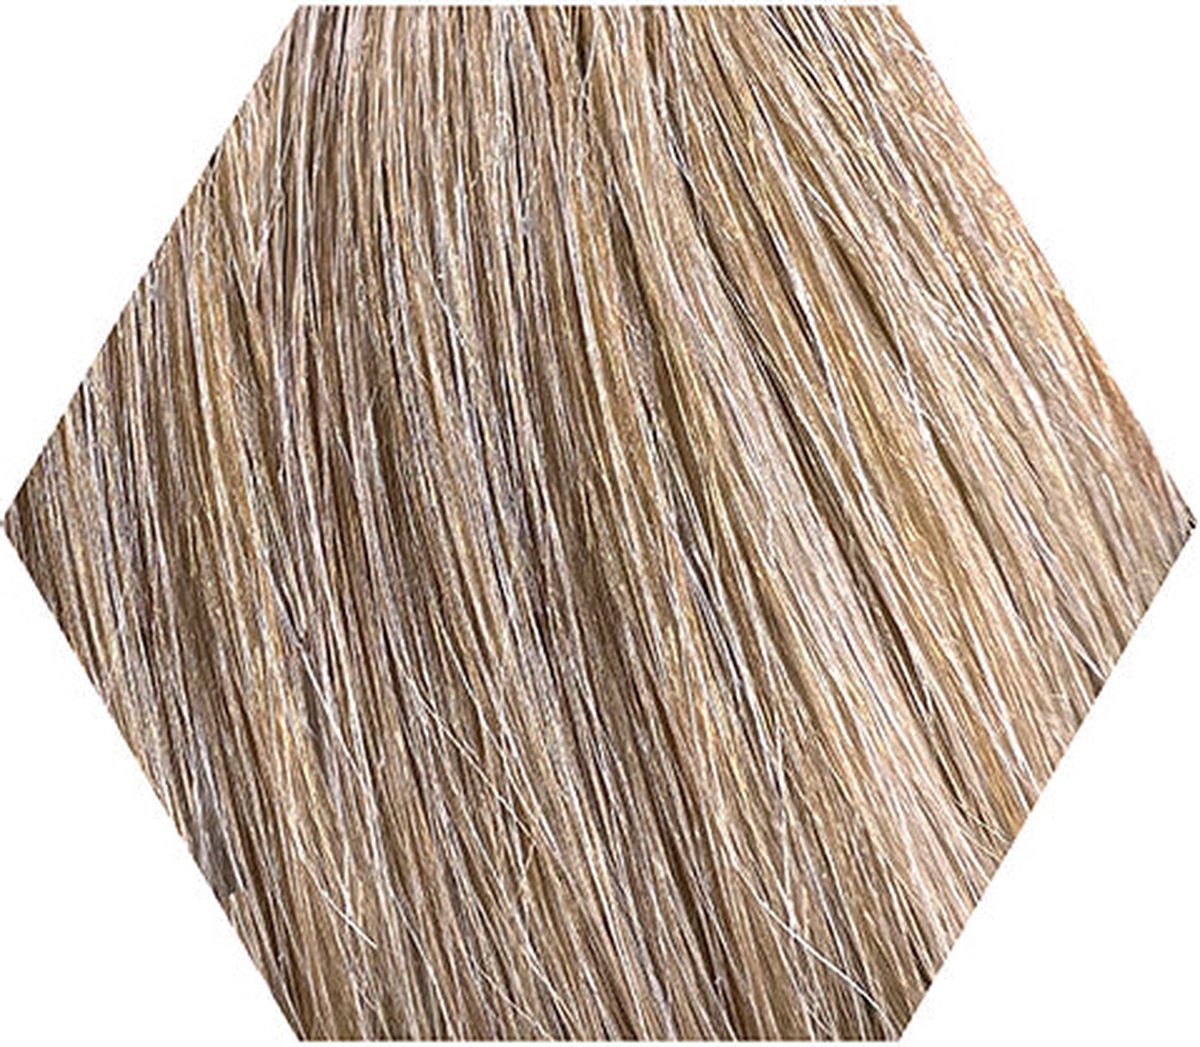 Wecolour - Kleuring - Haarkleuring - Haarkleur - Extra as lichtblond 10.11 - Kapperskwaliteit Haarverf